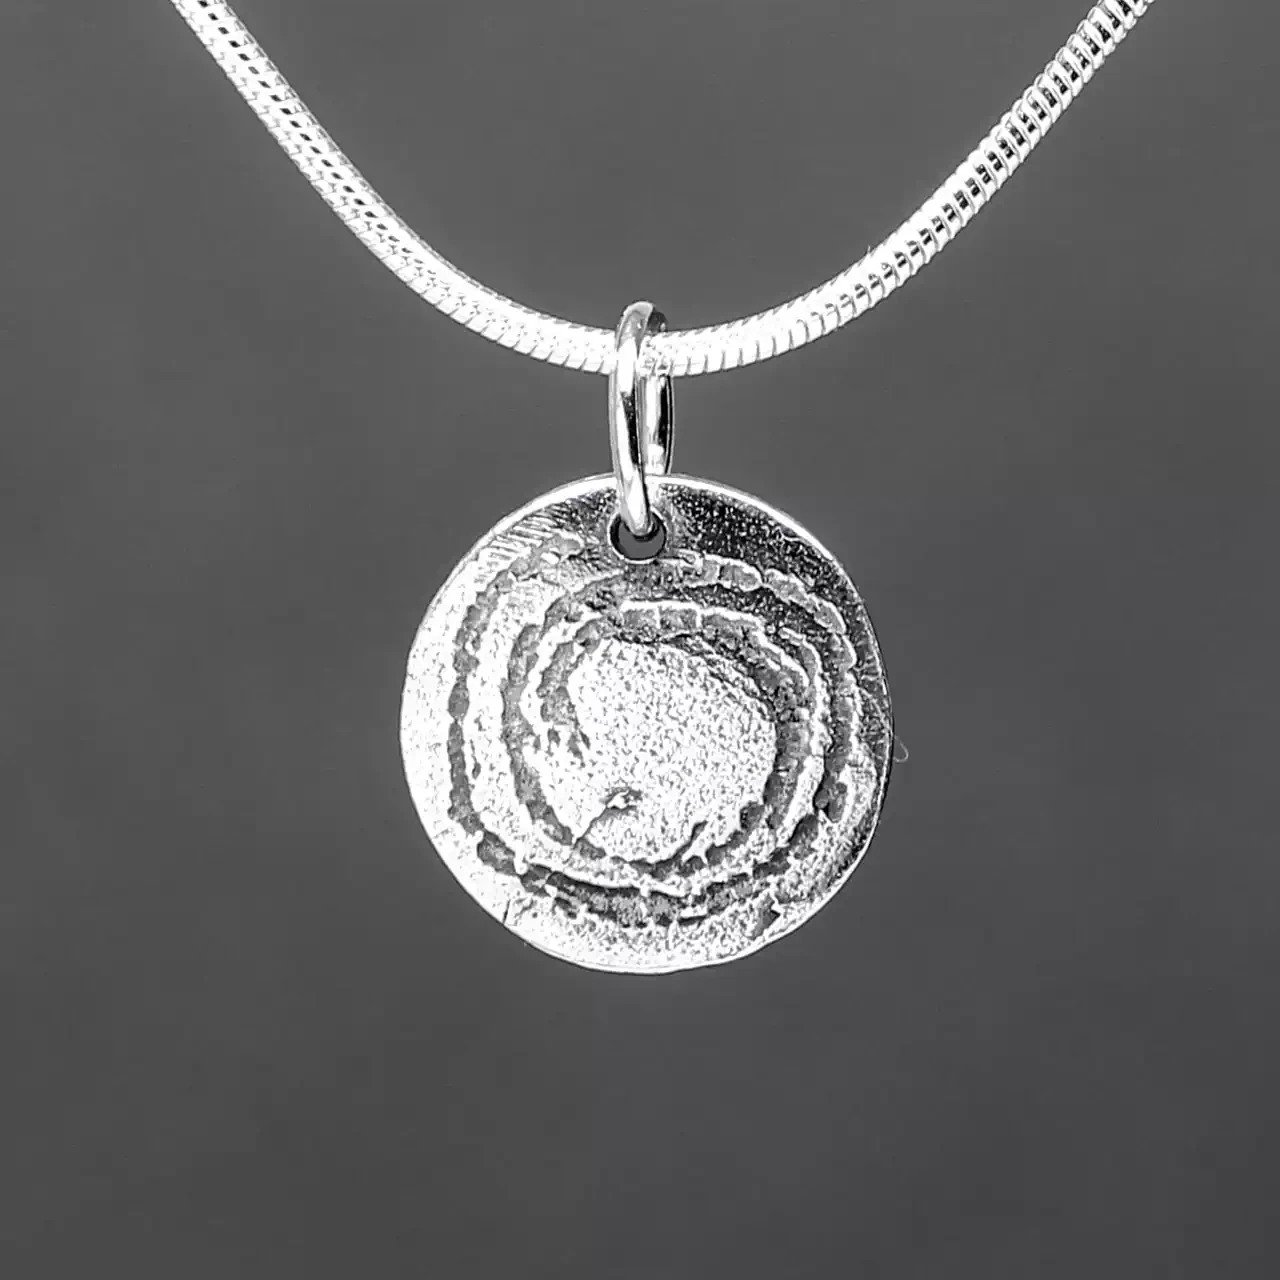 Barclodiad Oxidised Silver Pendant by Silverfish